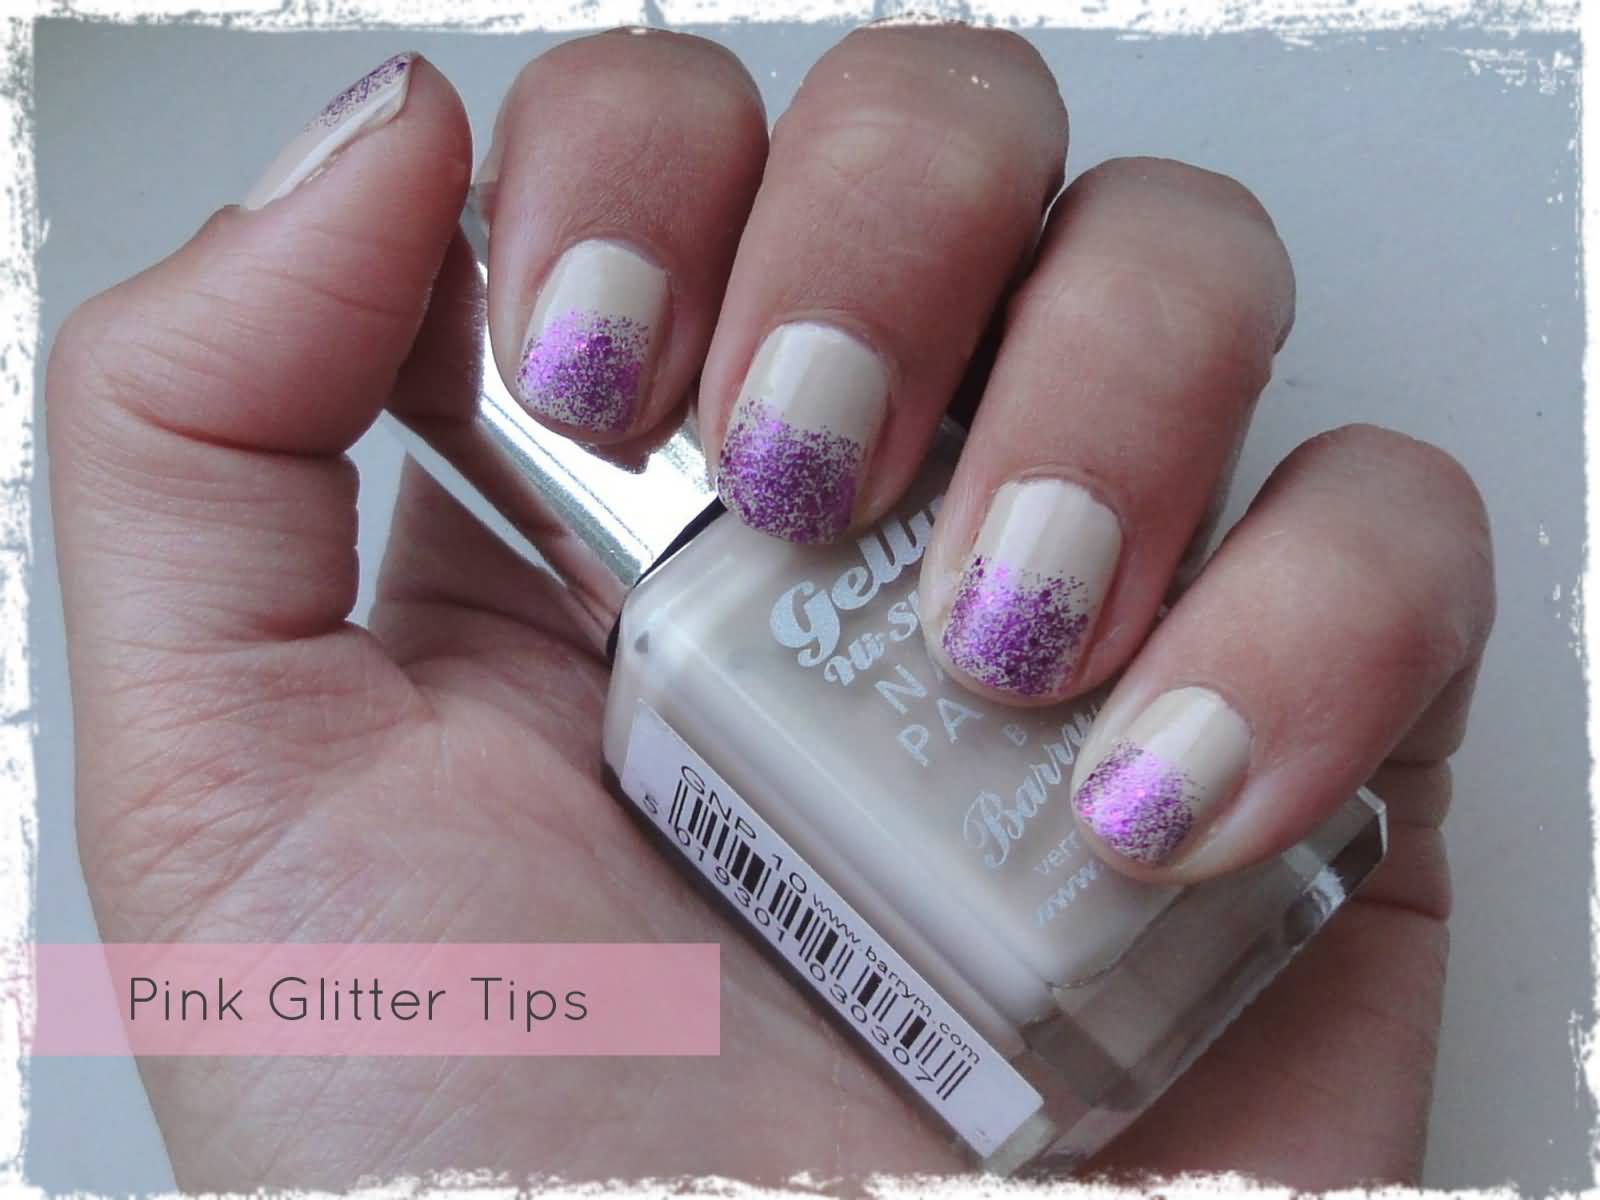 Pink Glitter Tips Nail Art